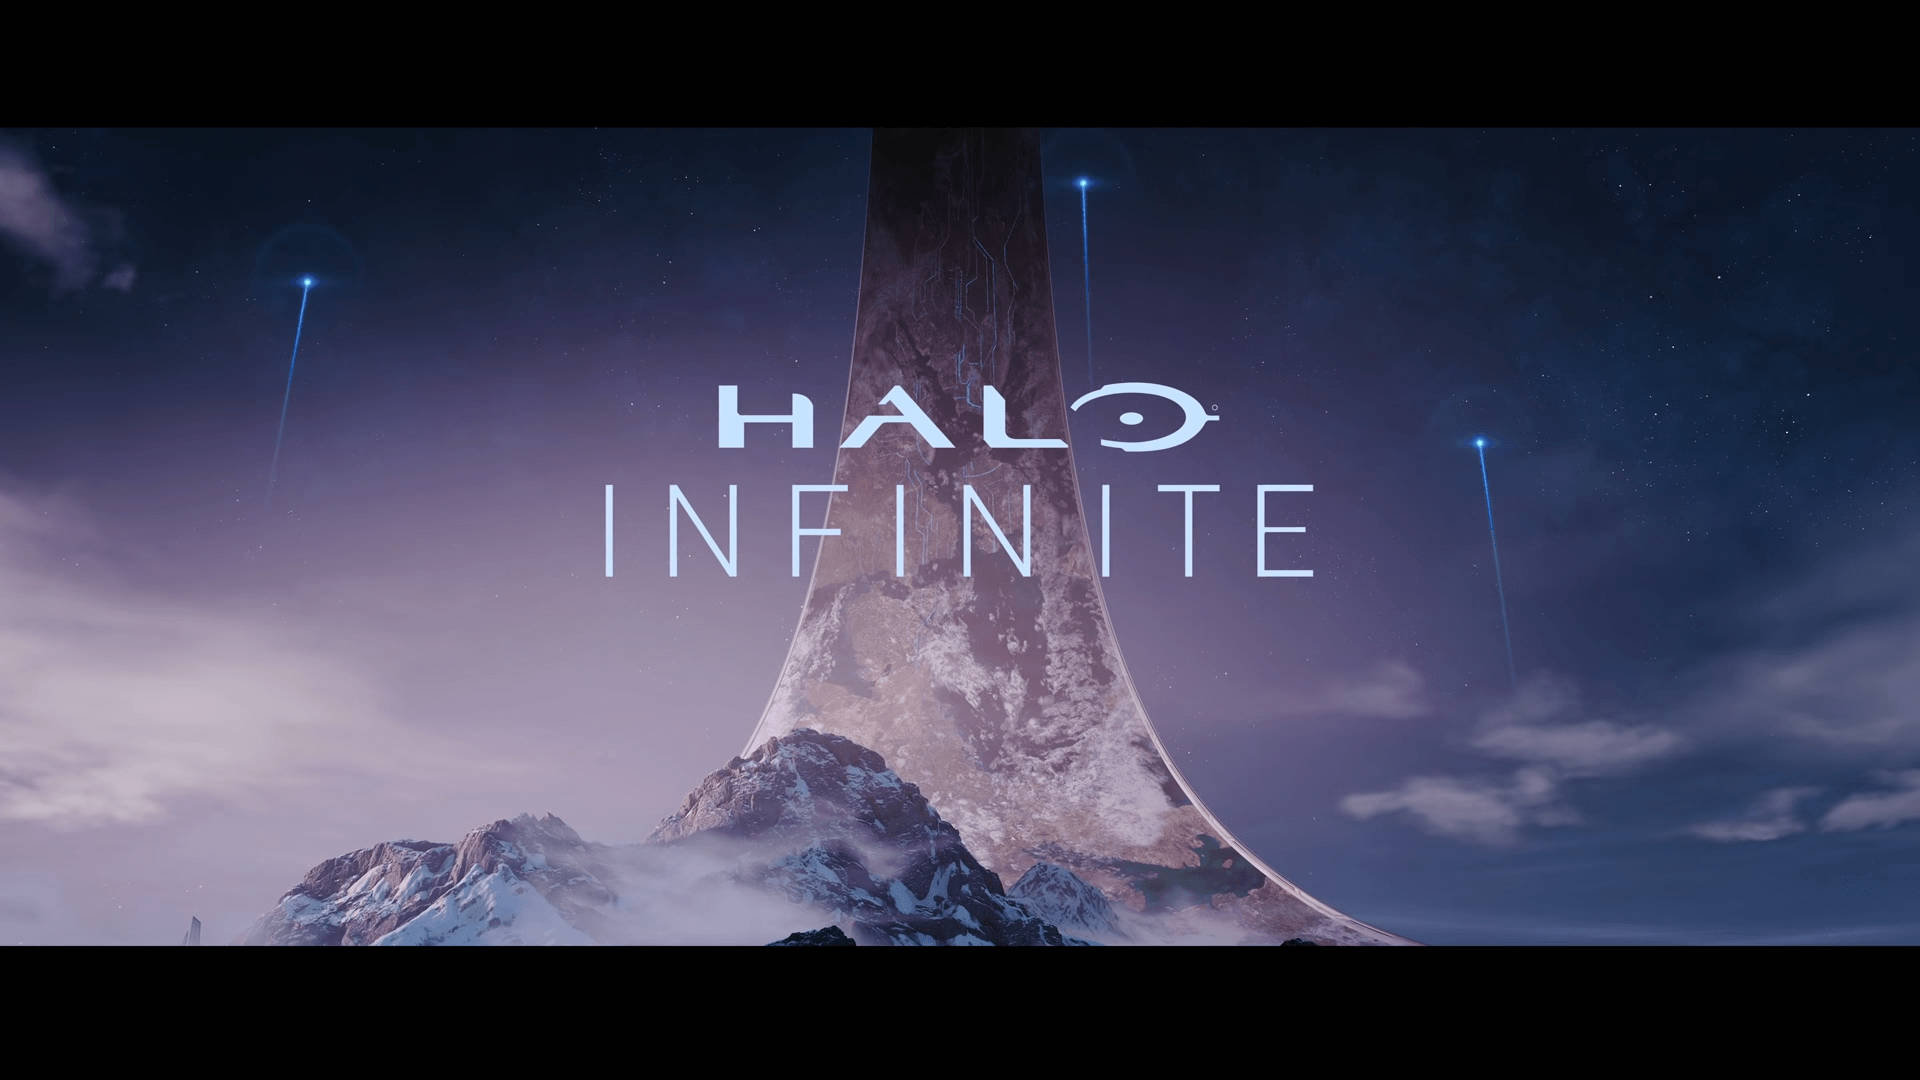 Halo Infinite Spaceships In Sky